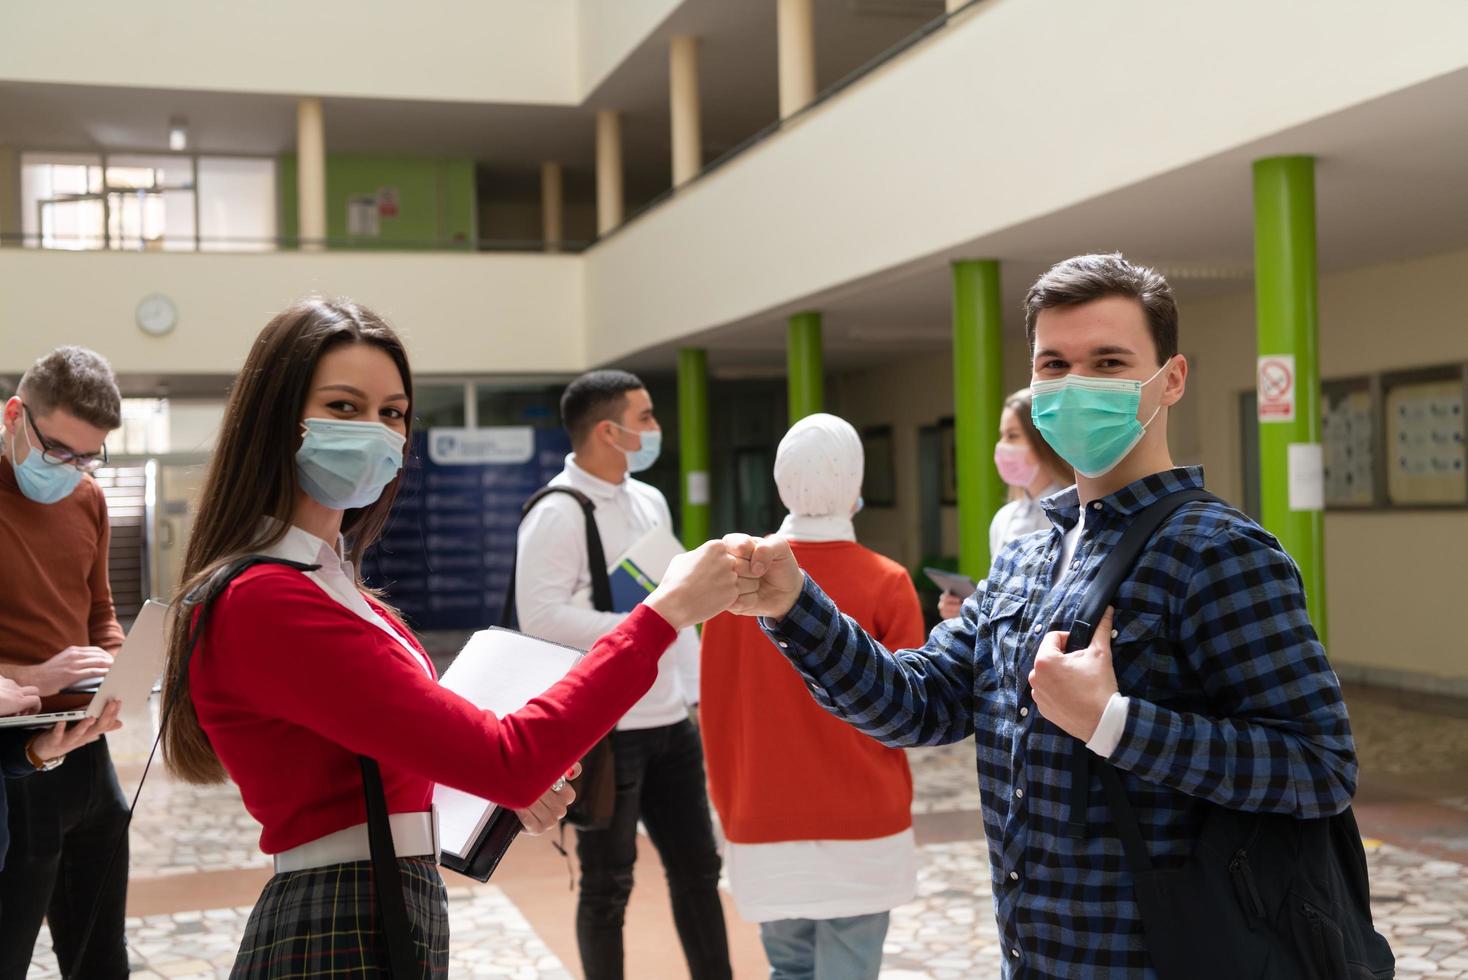 students greeting new normal coronavirus handshake and elbow bumping photo